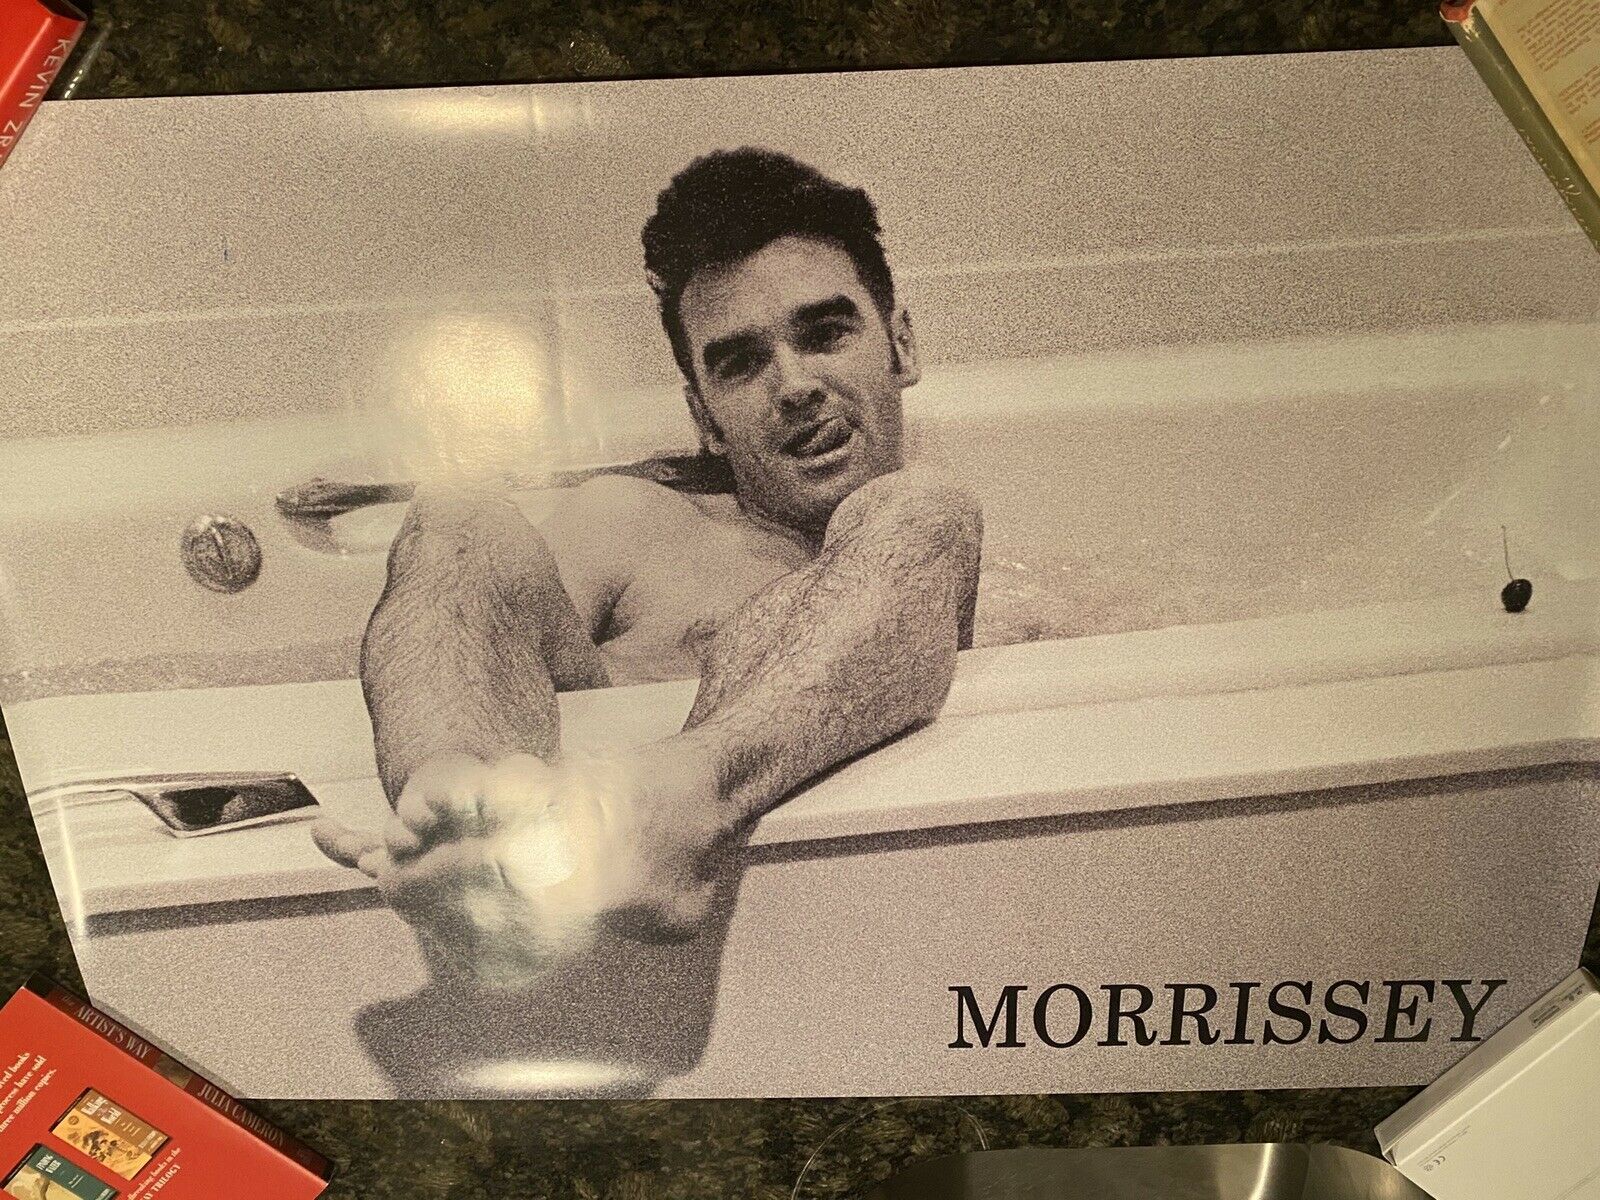 Morrissey Bathtub Poster Smiths Pixies Joy Division Radiohead David Bowie Nin